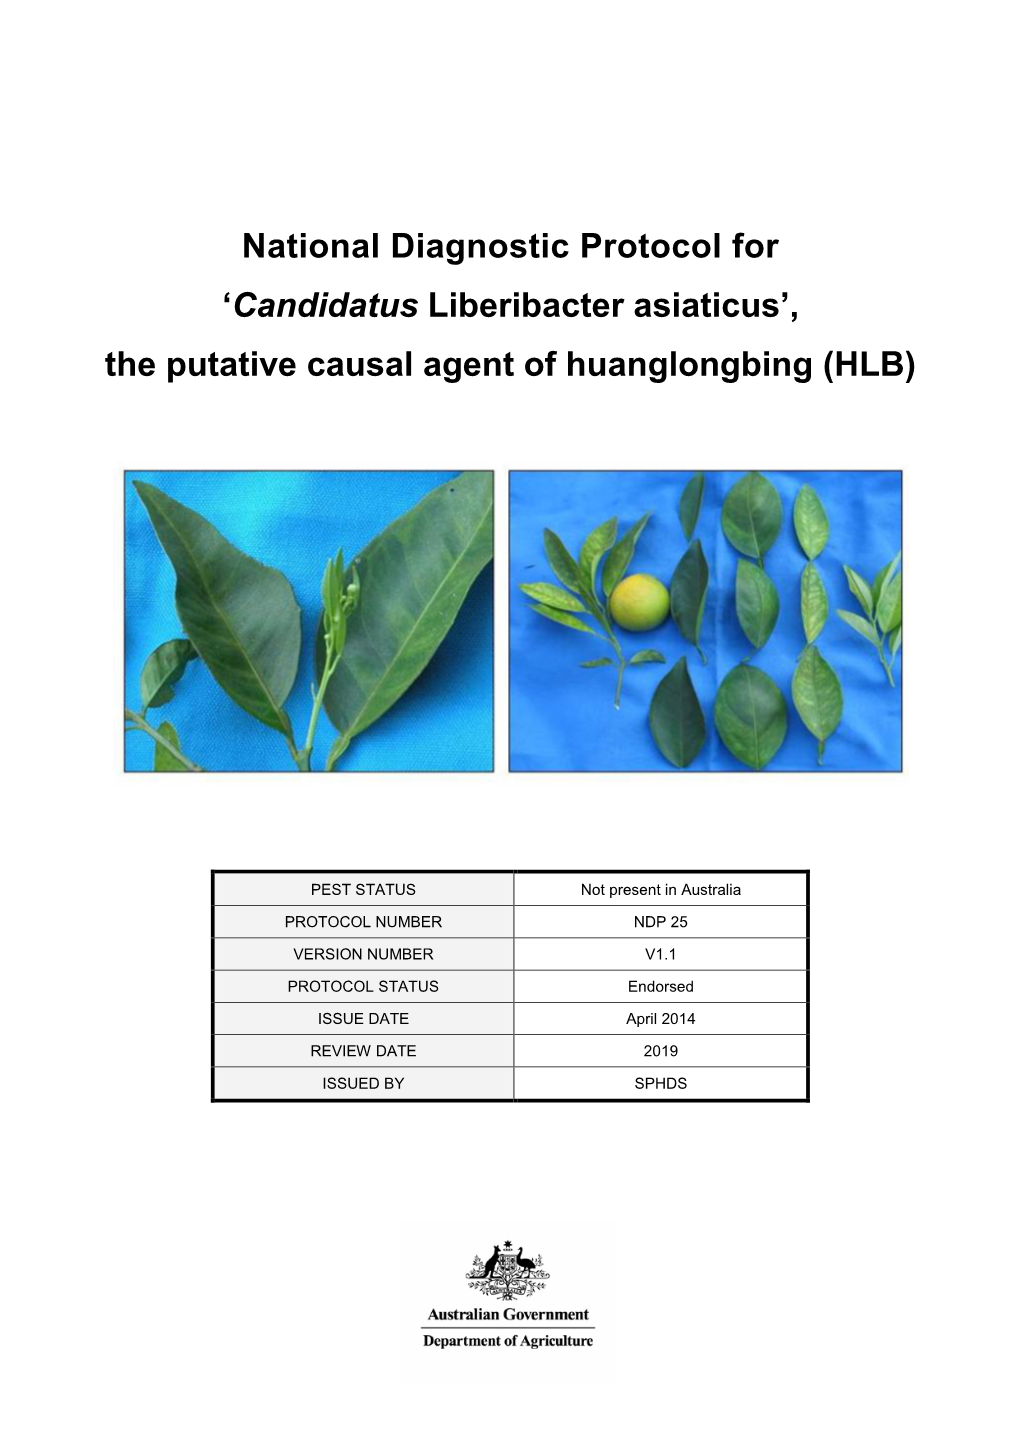 National Diagnostic Protocol for 'Candidatus Liberibacter Asiaticus'